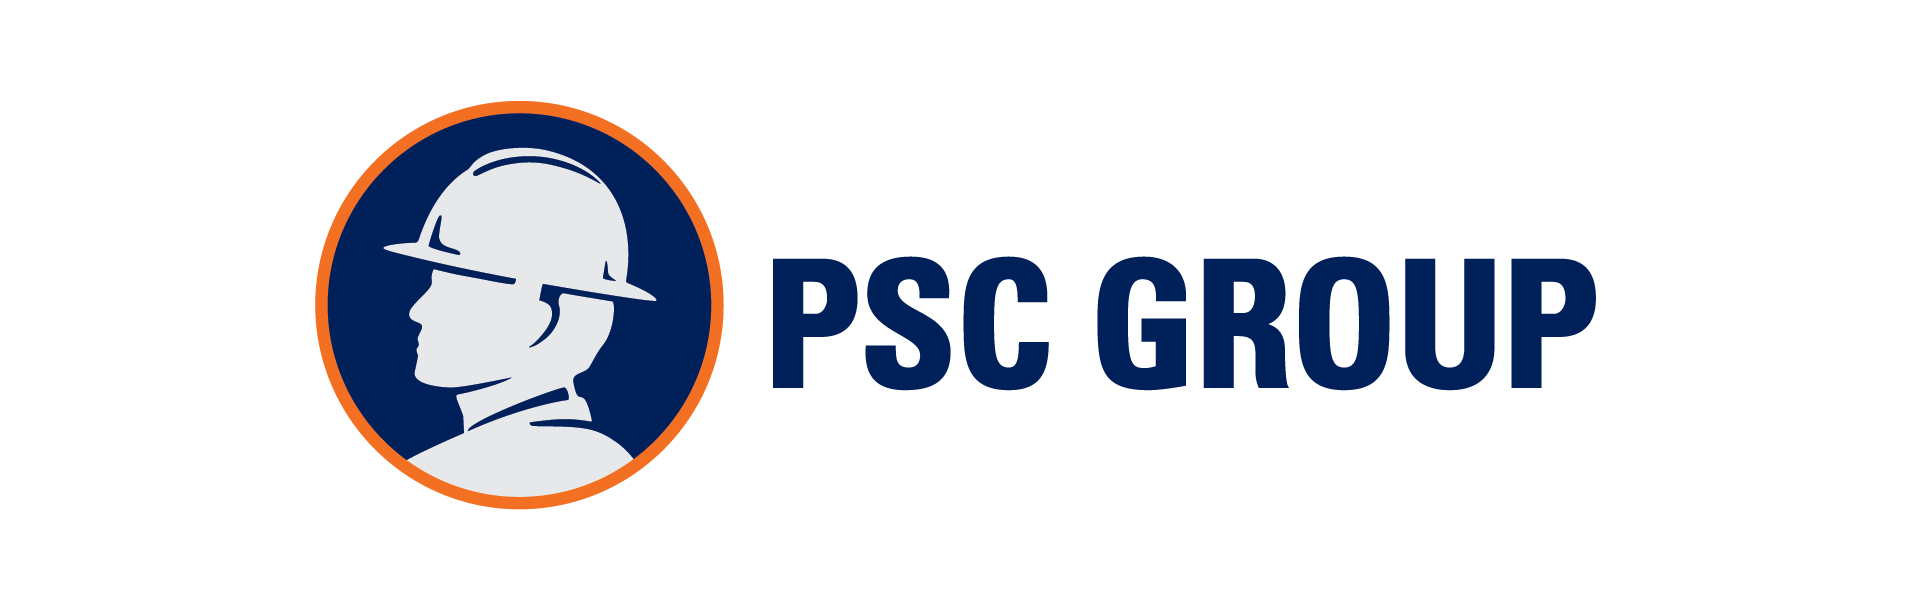 PSC Group - Tankerman OPS logo